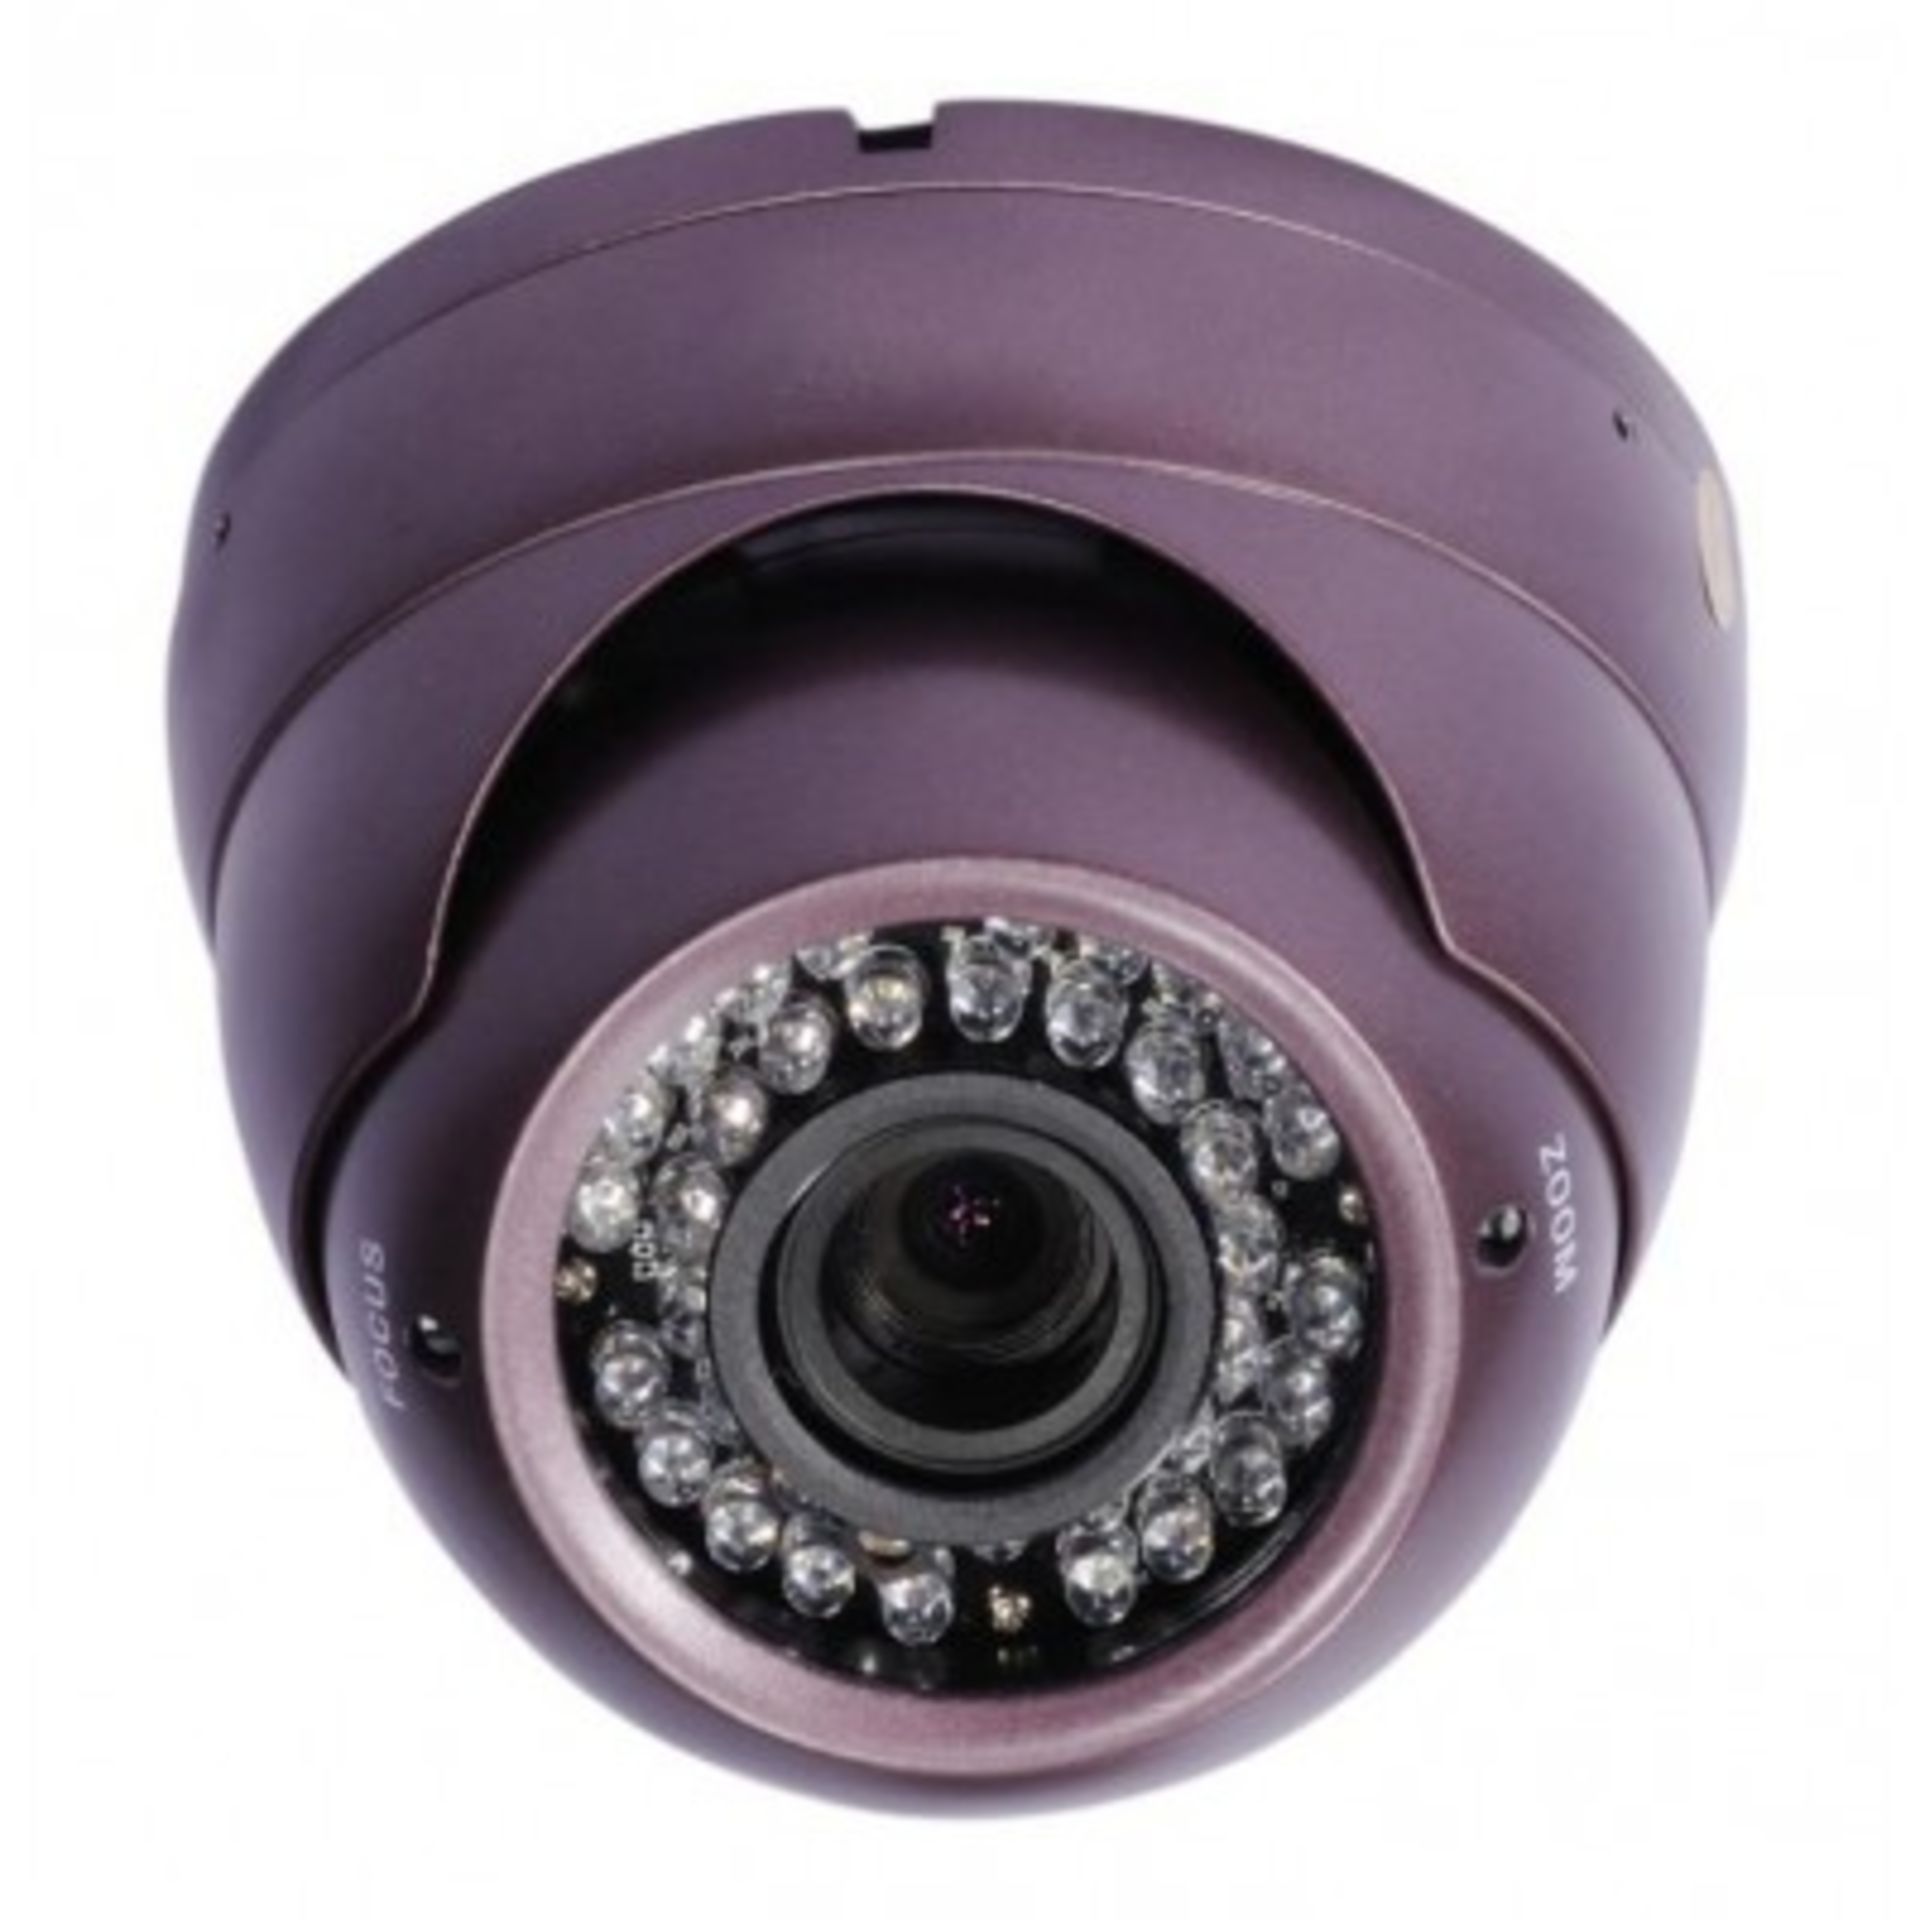 V Brand New Avtech Dome Camera- 1/3" Sony Colour CCD 540TVL Vandal Proof LP66- purple